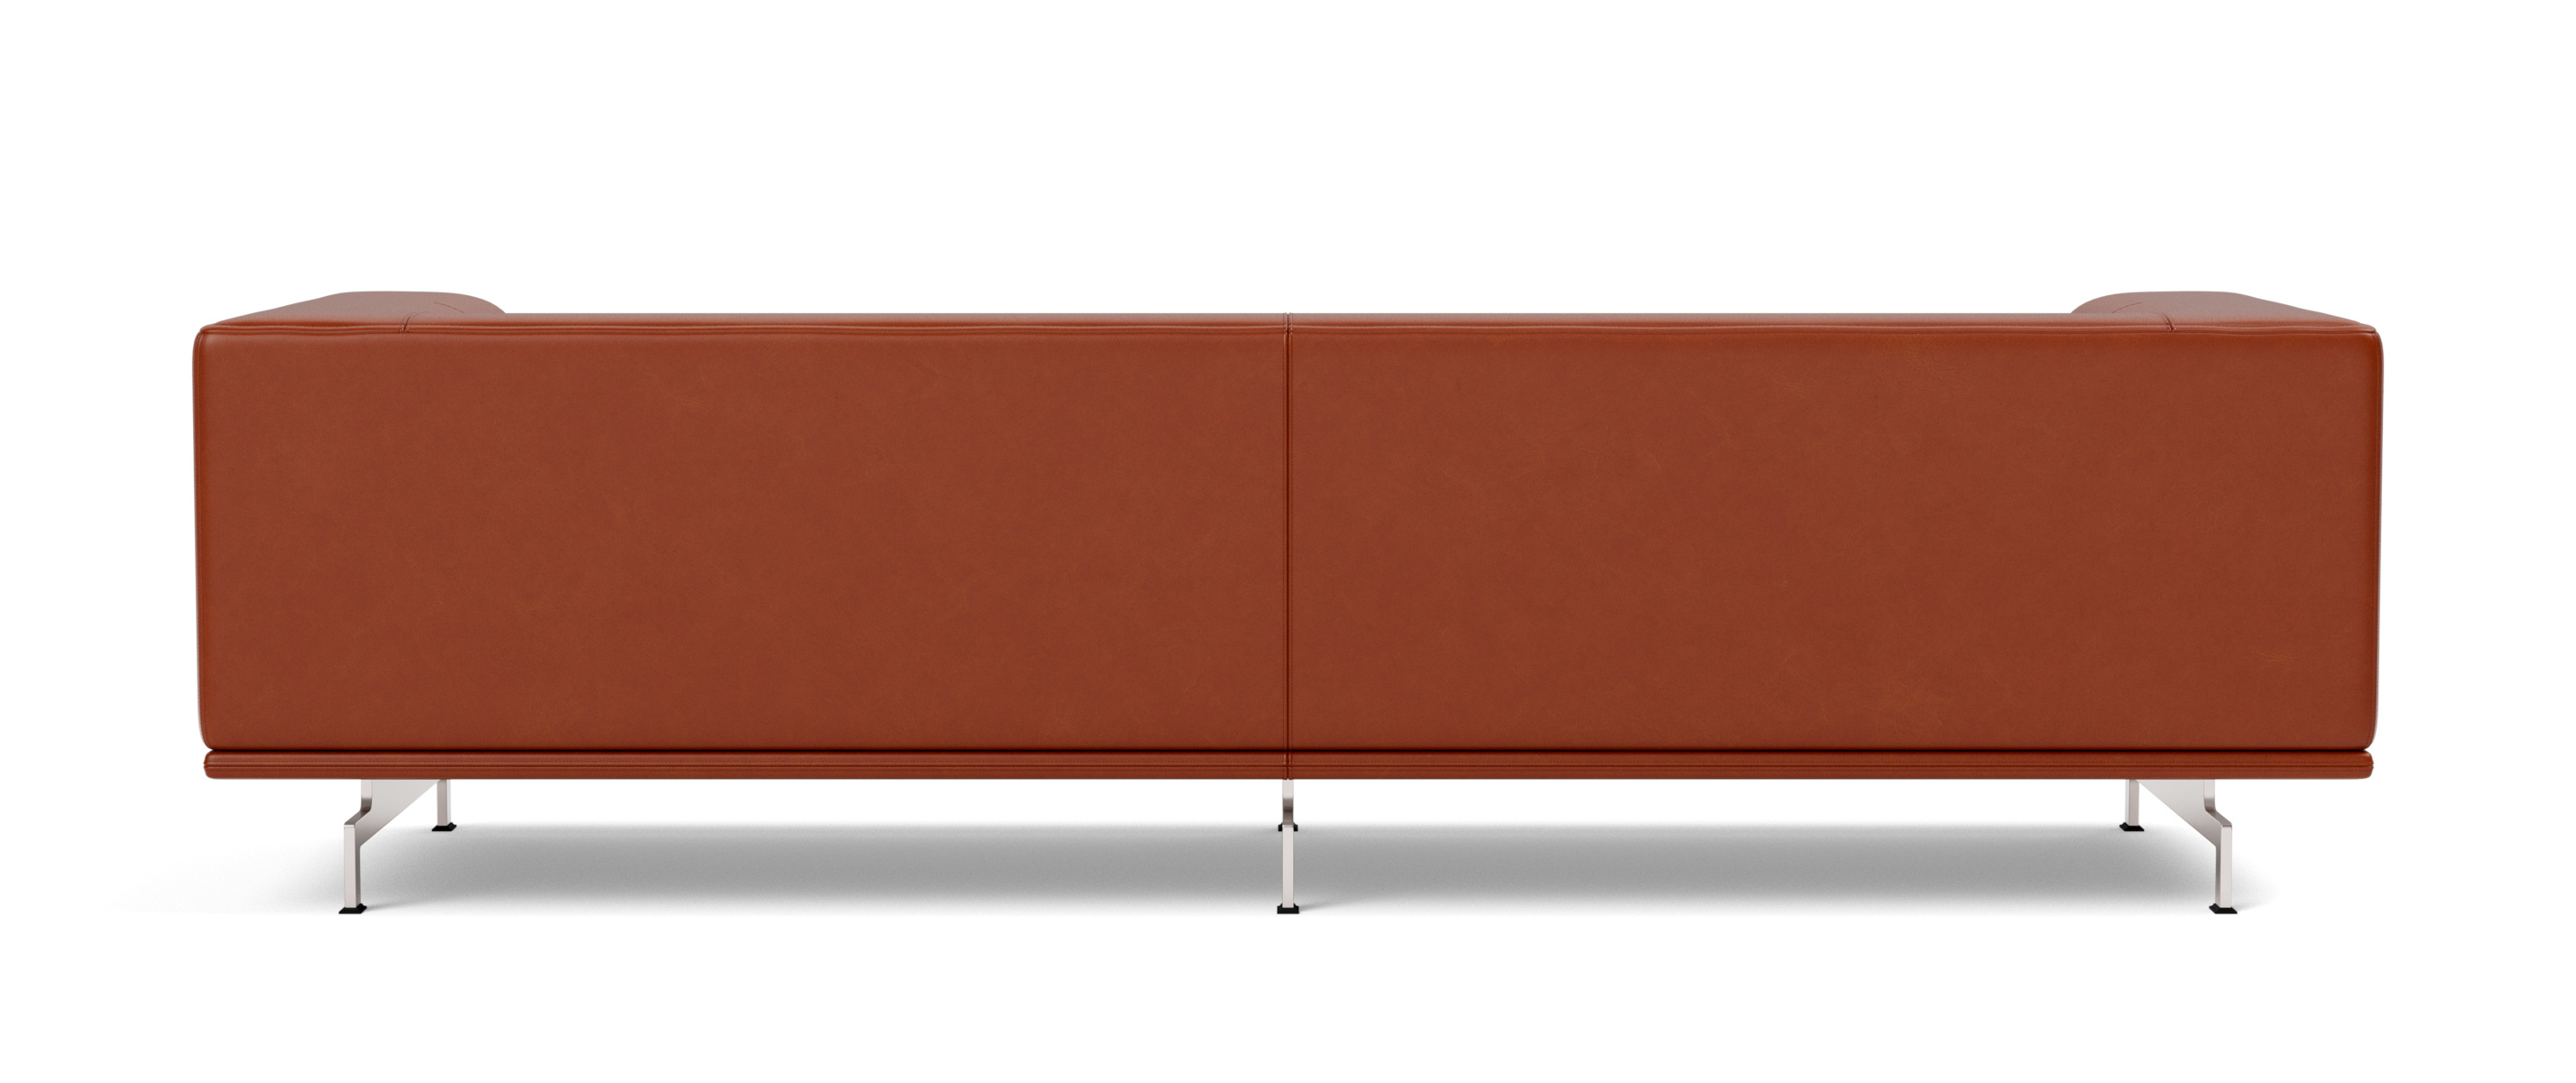 Delphi Sofa - Model 4511, brushed aluminium / leder cera 905 russet brown